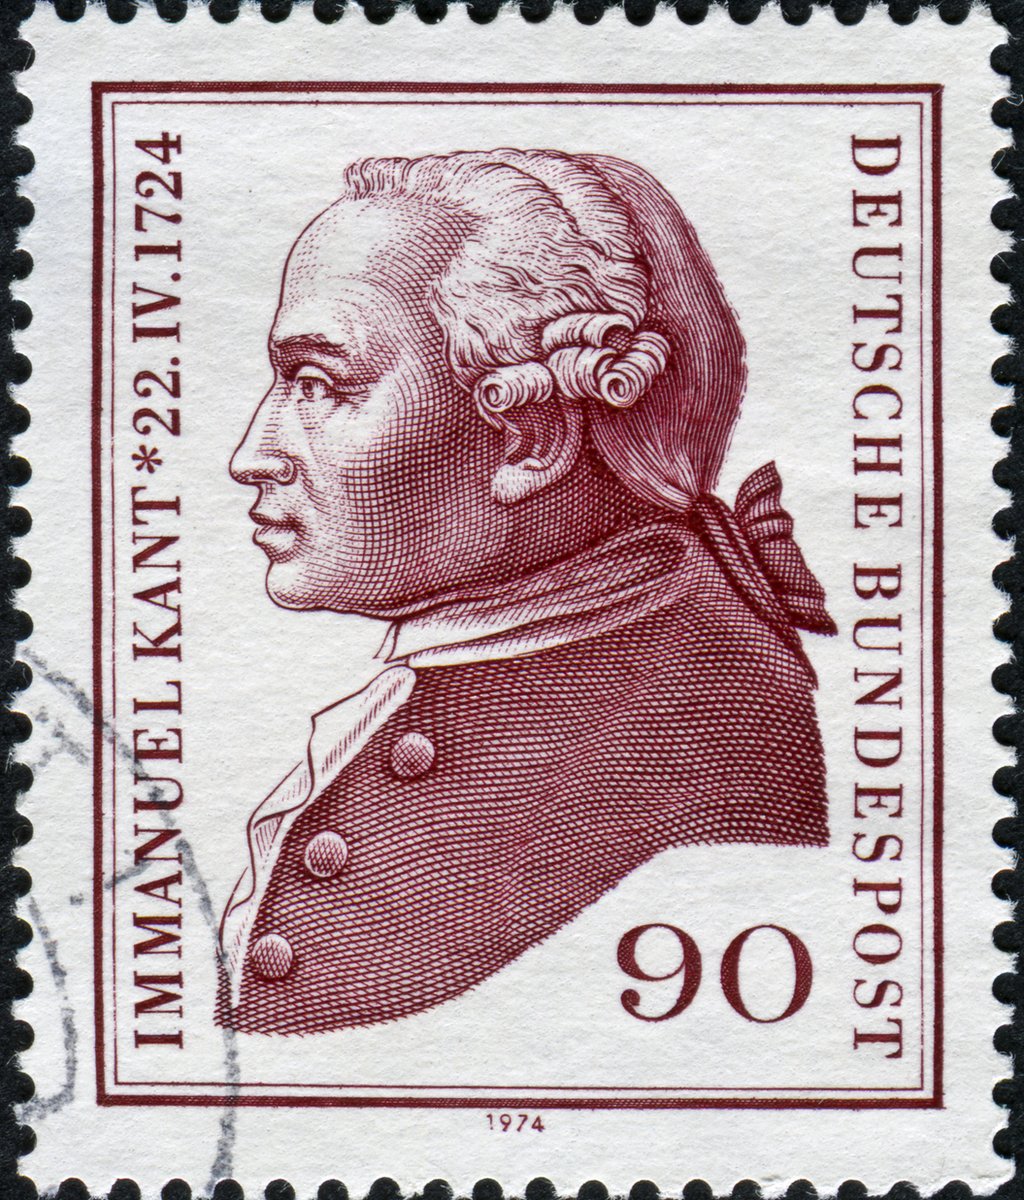 German stamp celebrating Kant.